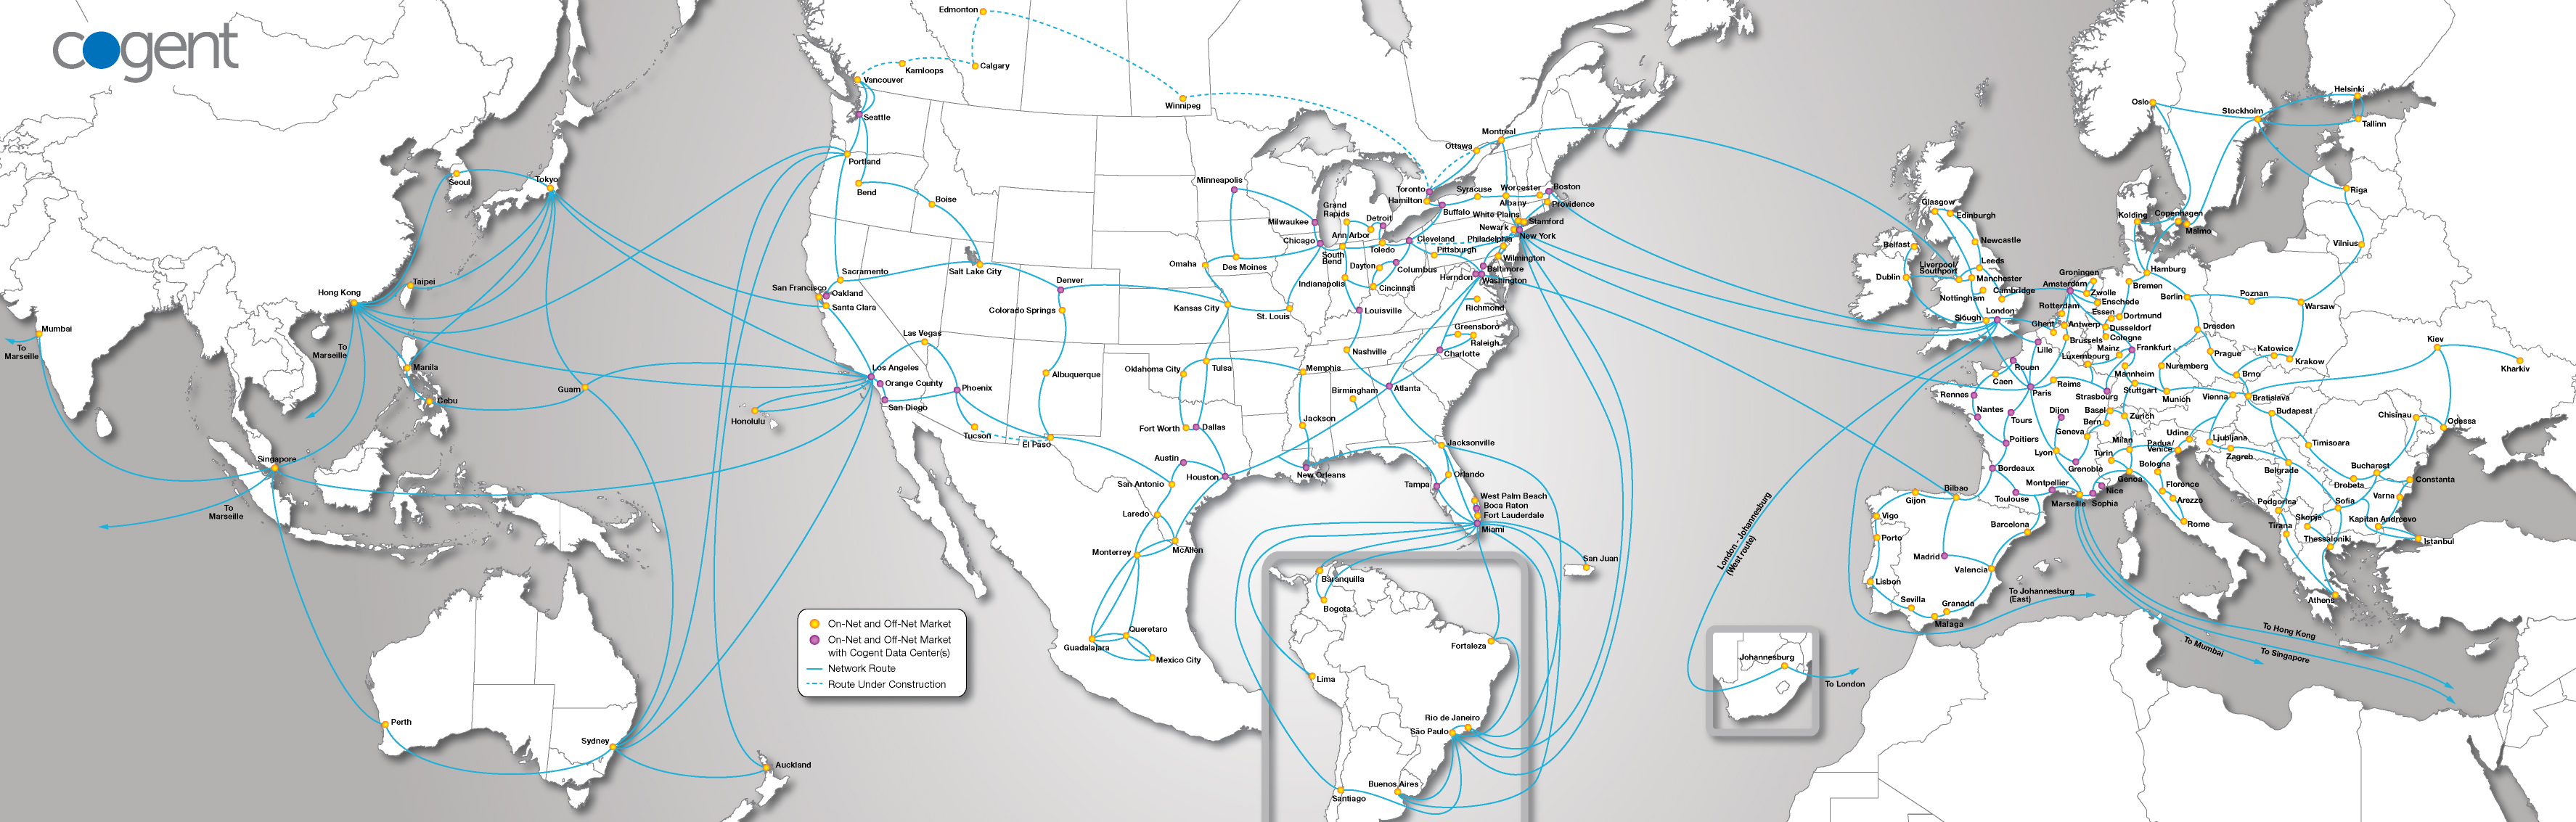 Cogent Network Map